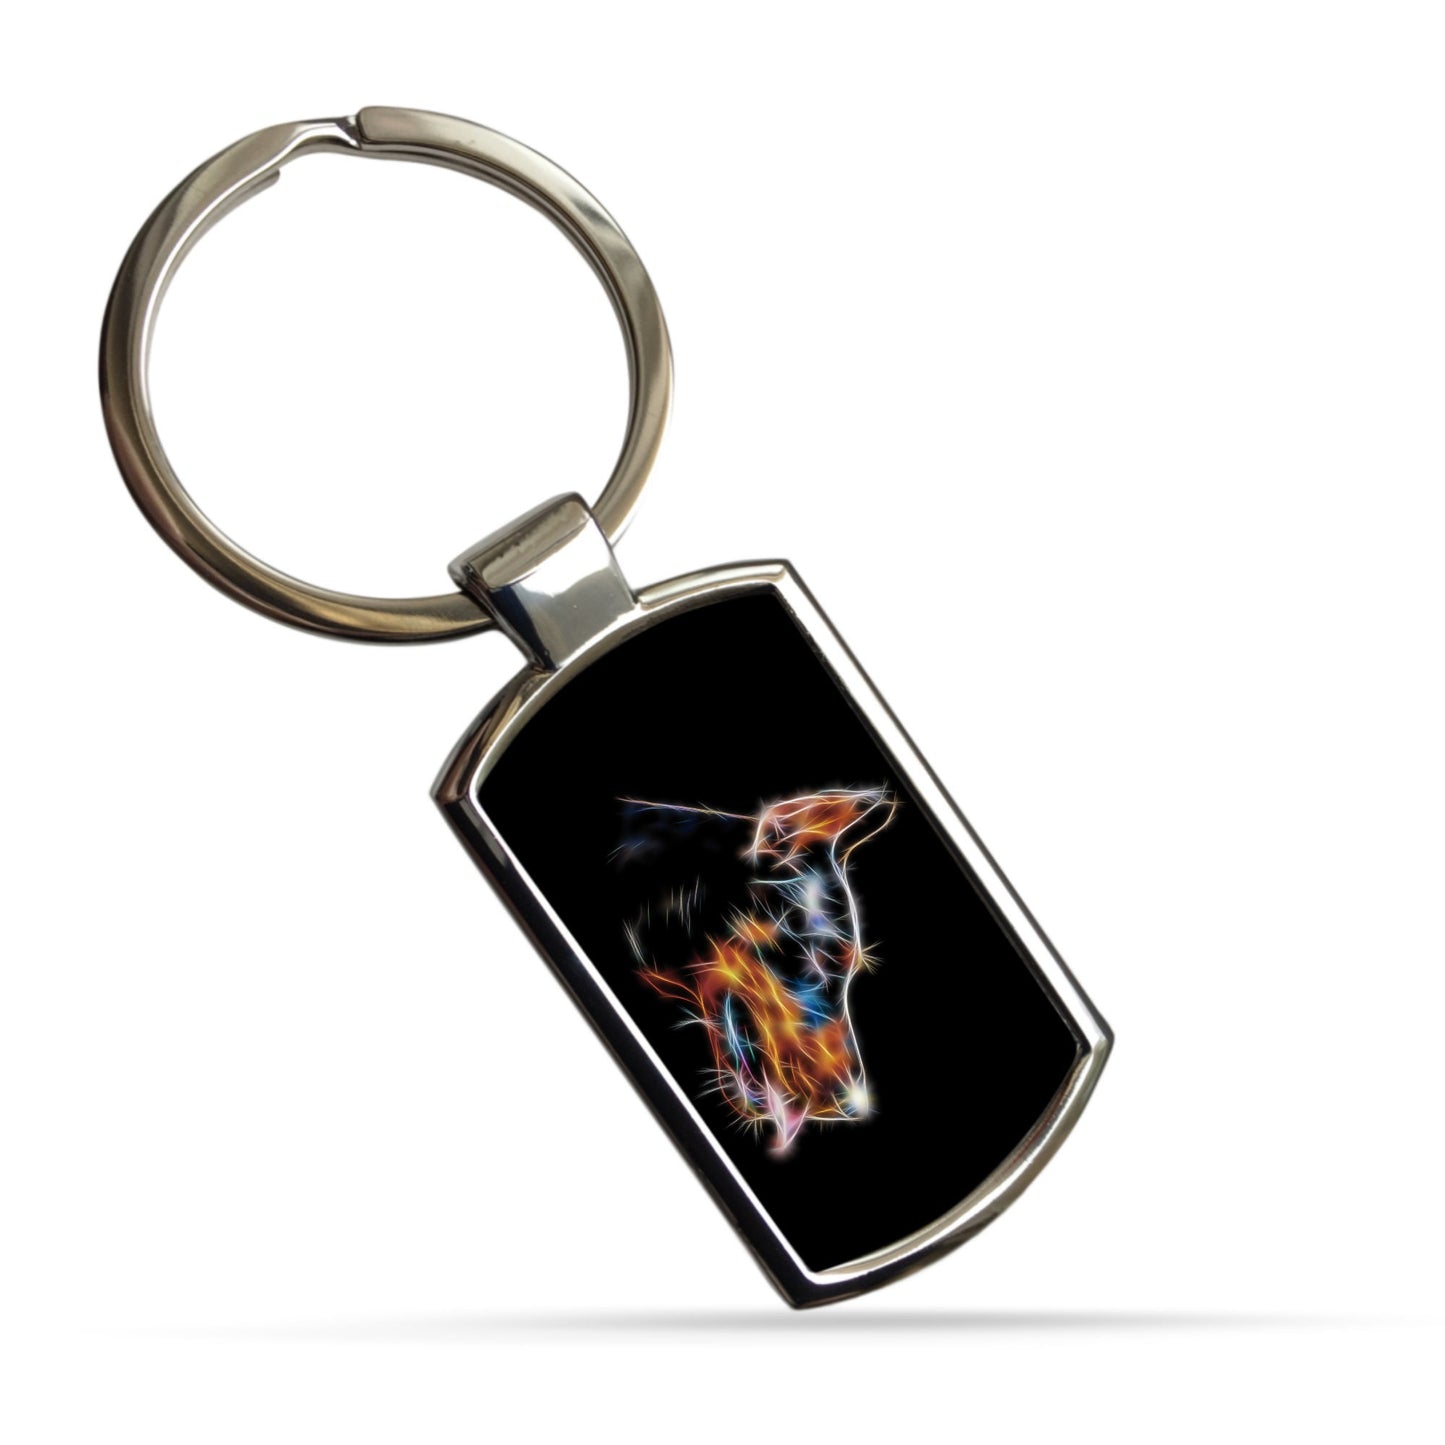 Doberman Dog Keychain with Fractal Art Design